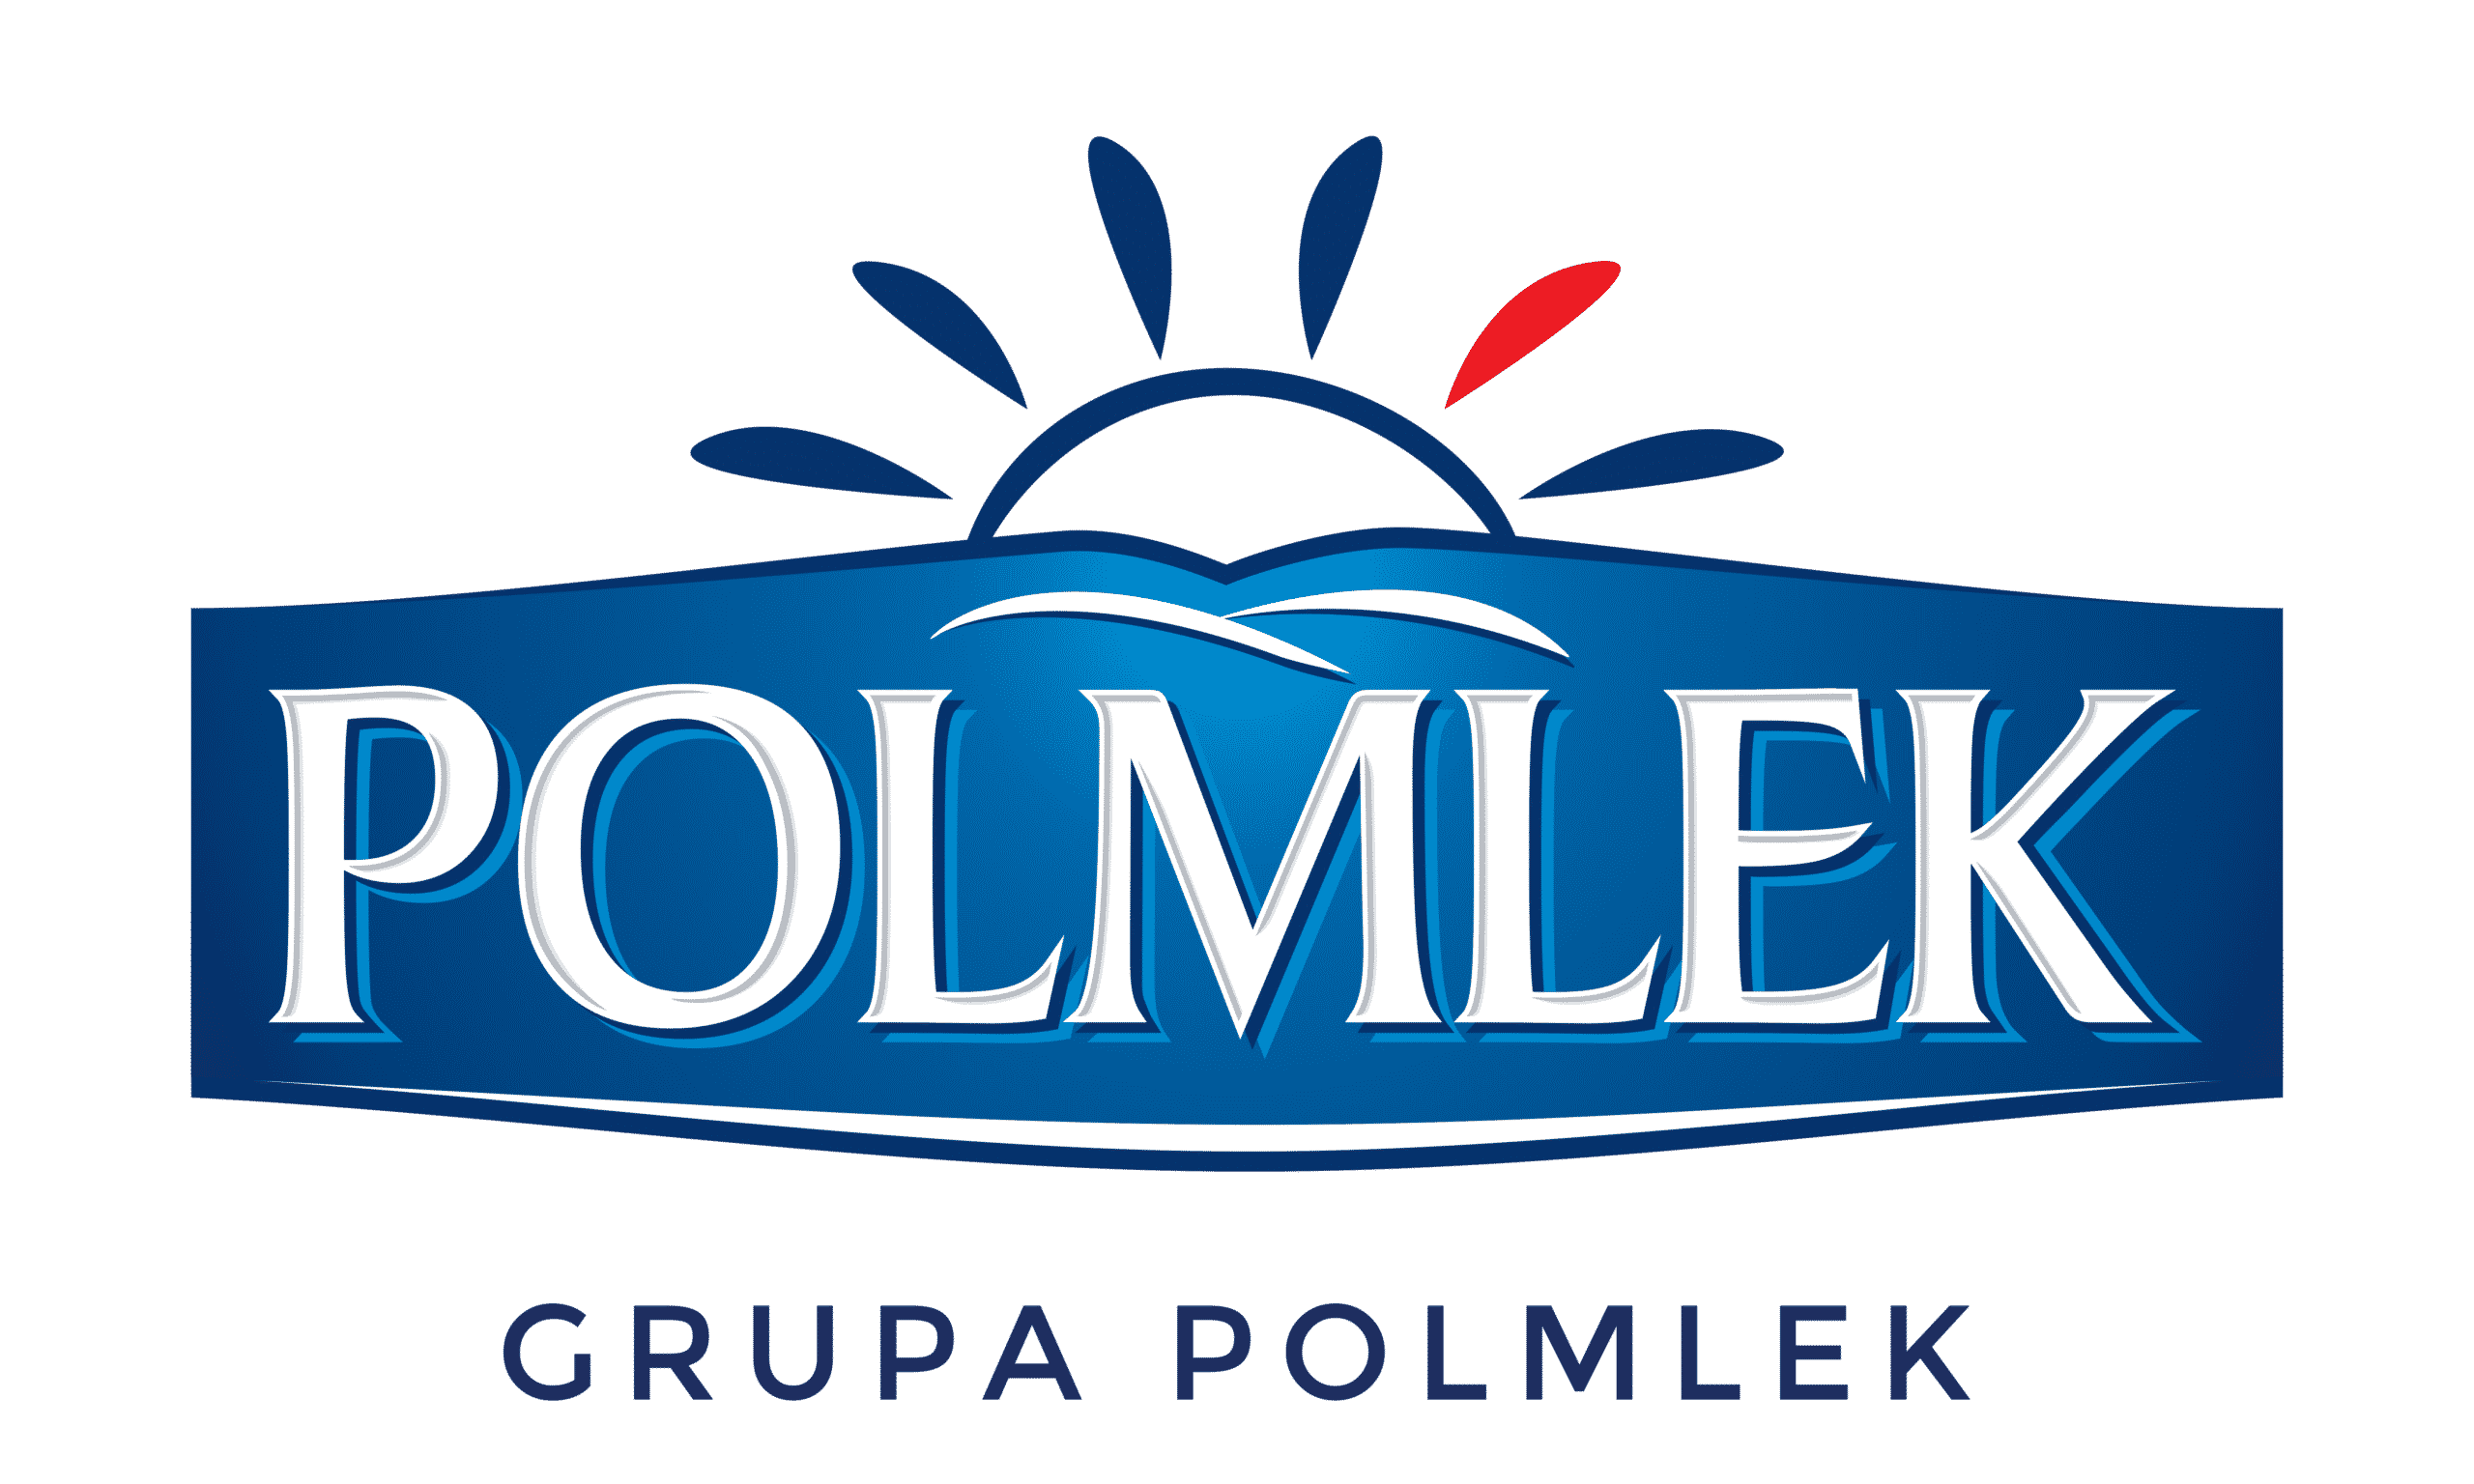 logo-grupa-polmlek-krzywe